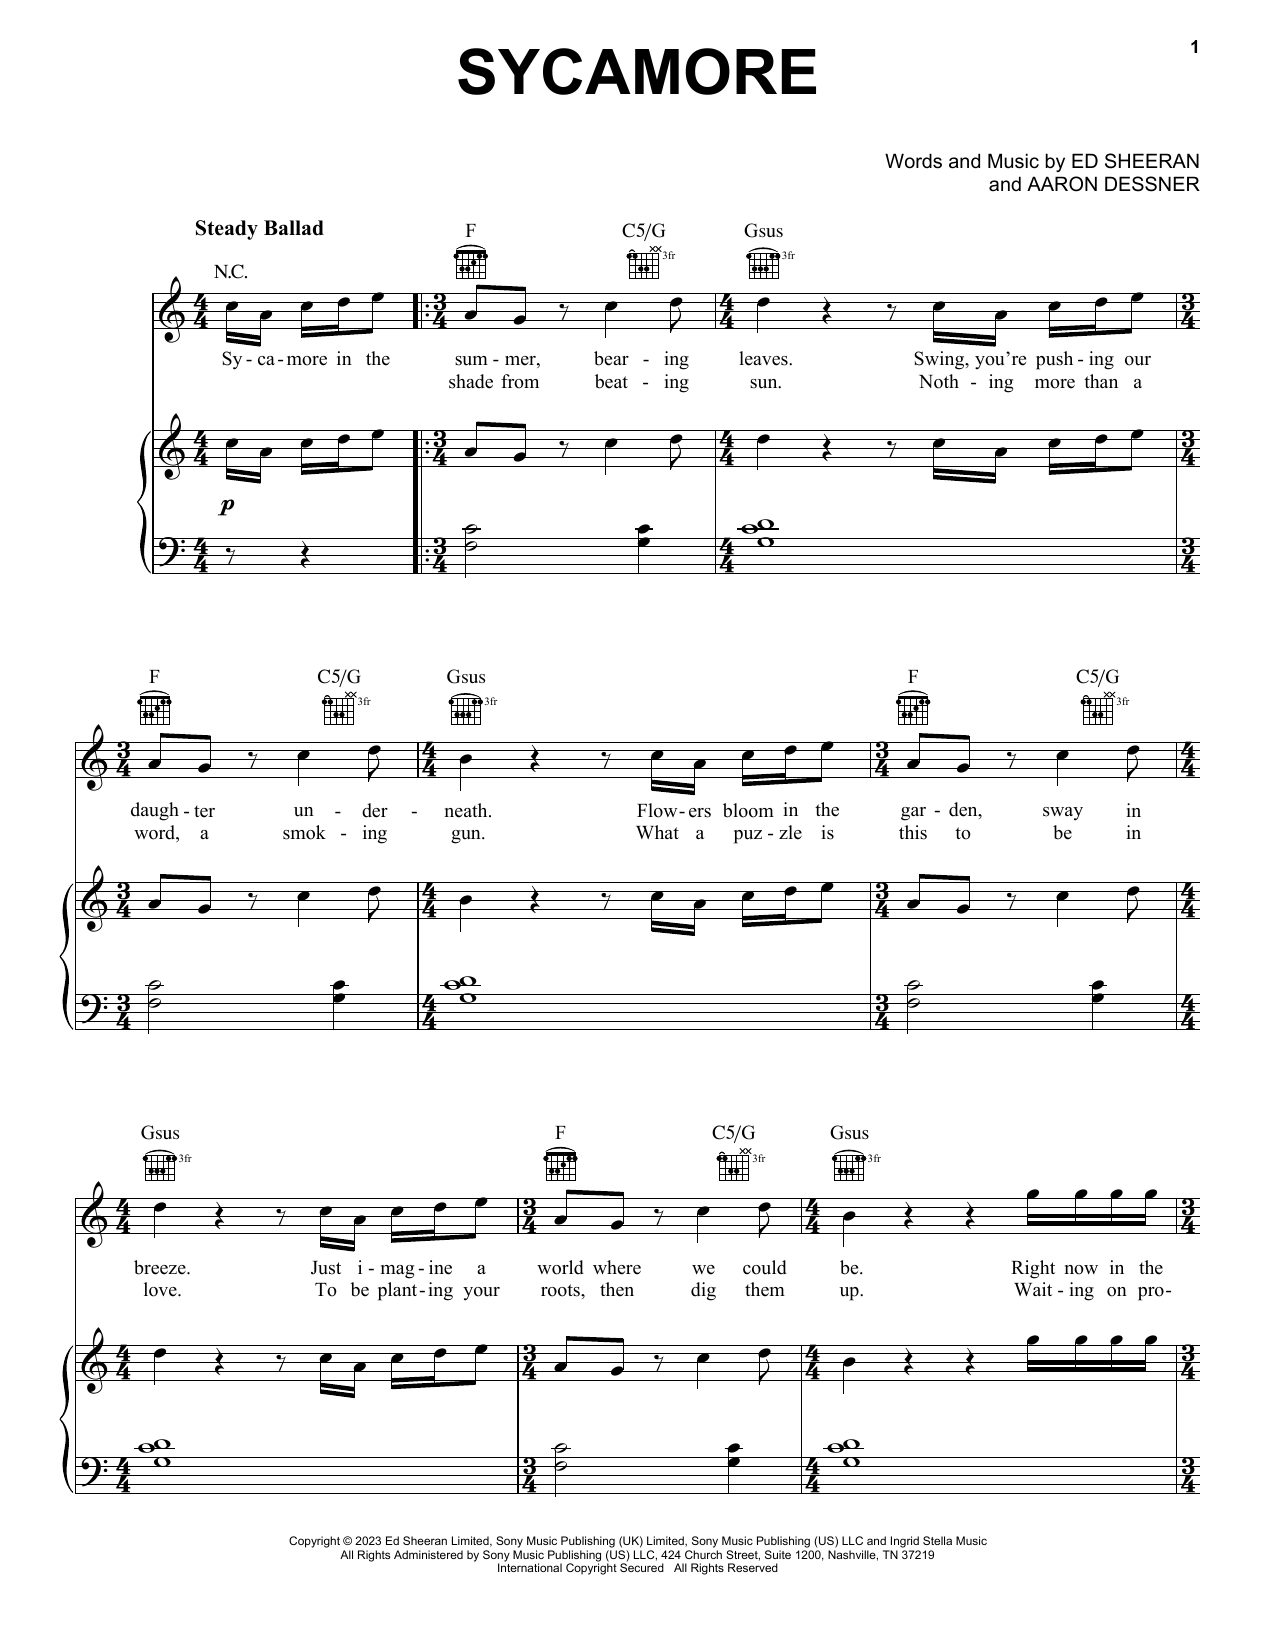 Ed Sheeran Sycamore sheet music notes printable PDF score